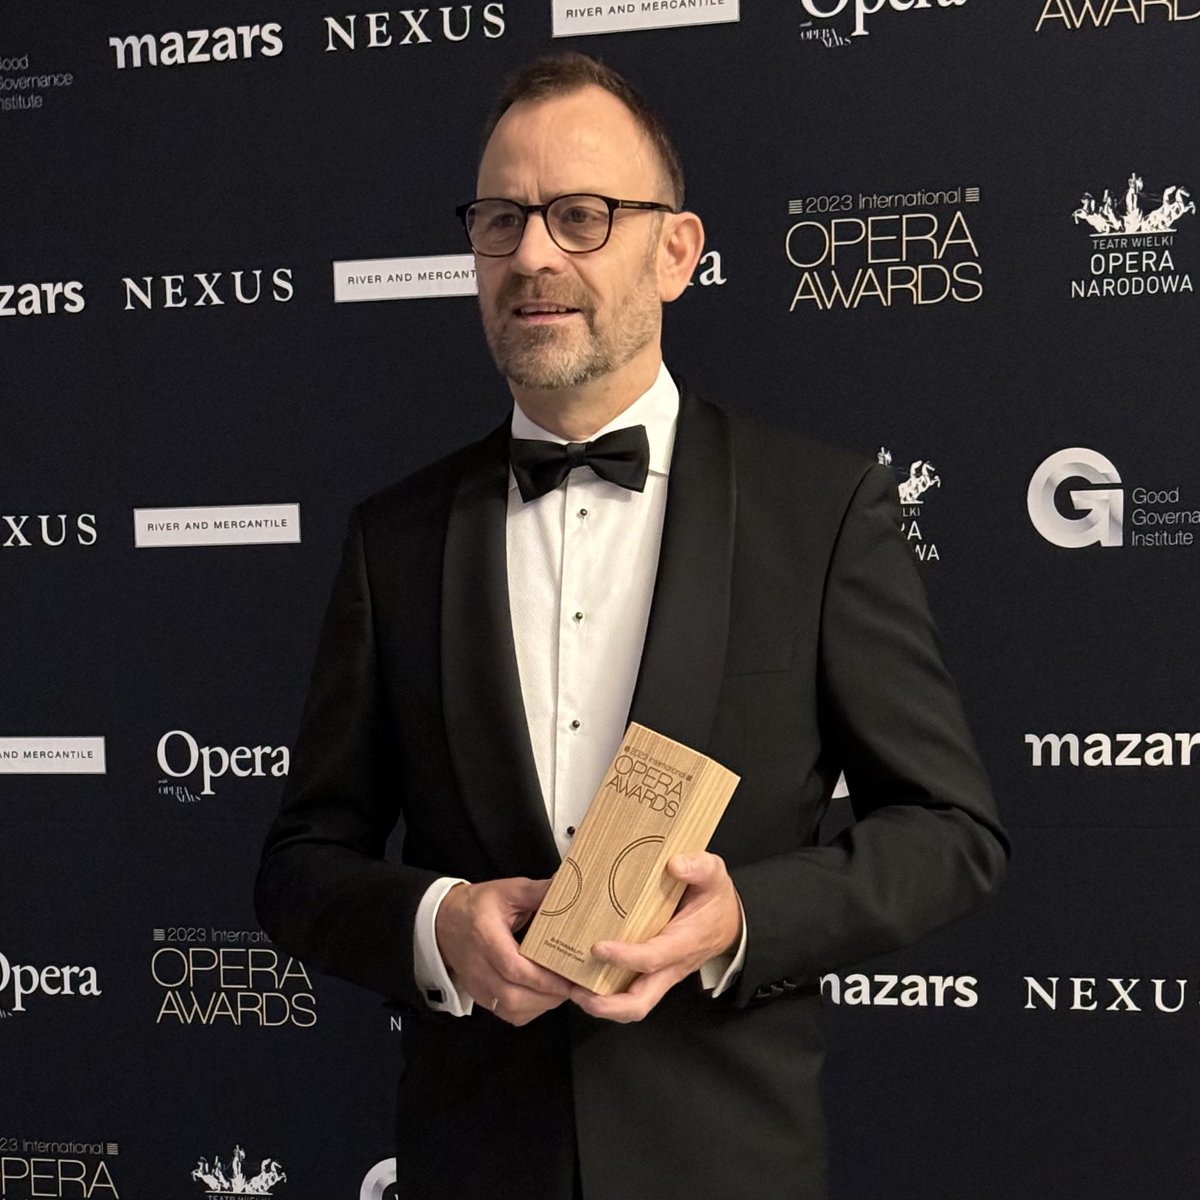 Bob Brandsen from Dutch National Opera again, this time accepting the #OperaAwards2023 World Premiere award for Raskatov's Animal Farm